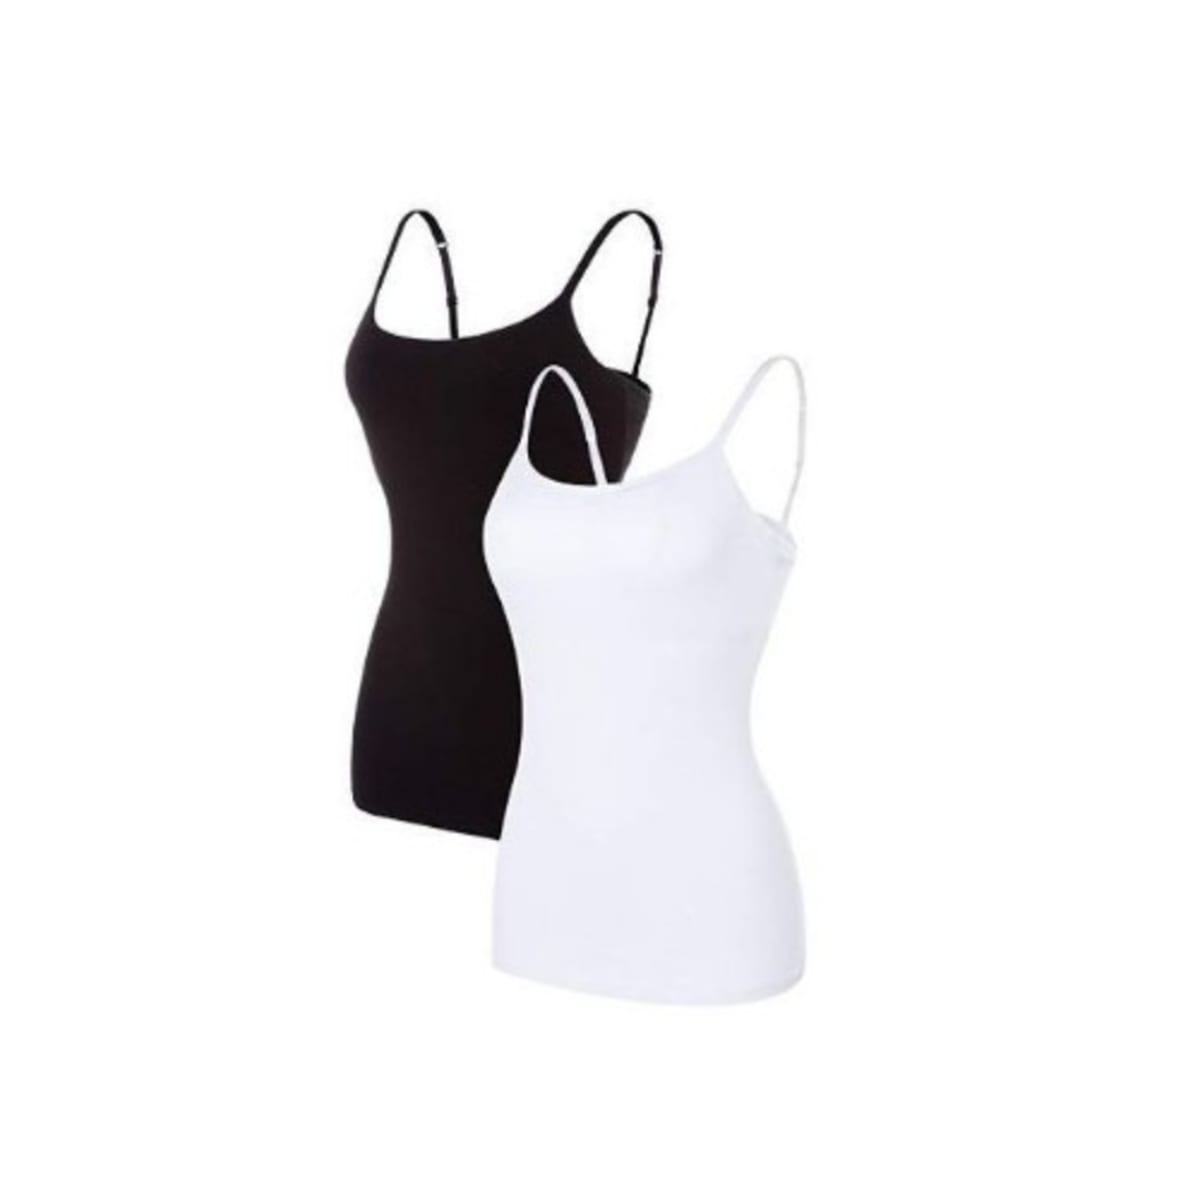 Fashion Ladies Cotton Camisole - Black And White (2 Sets)